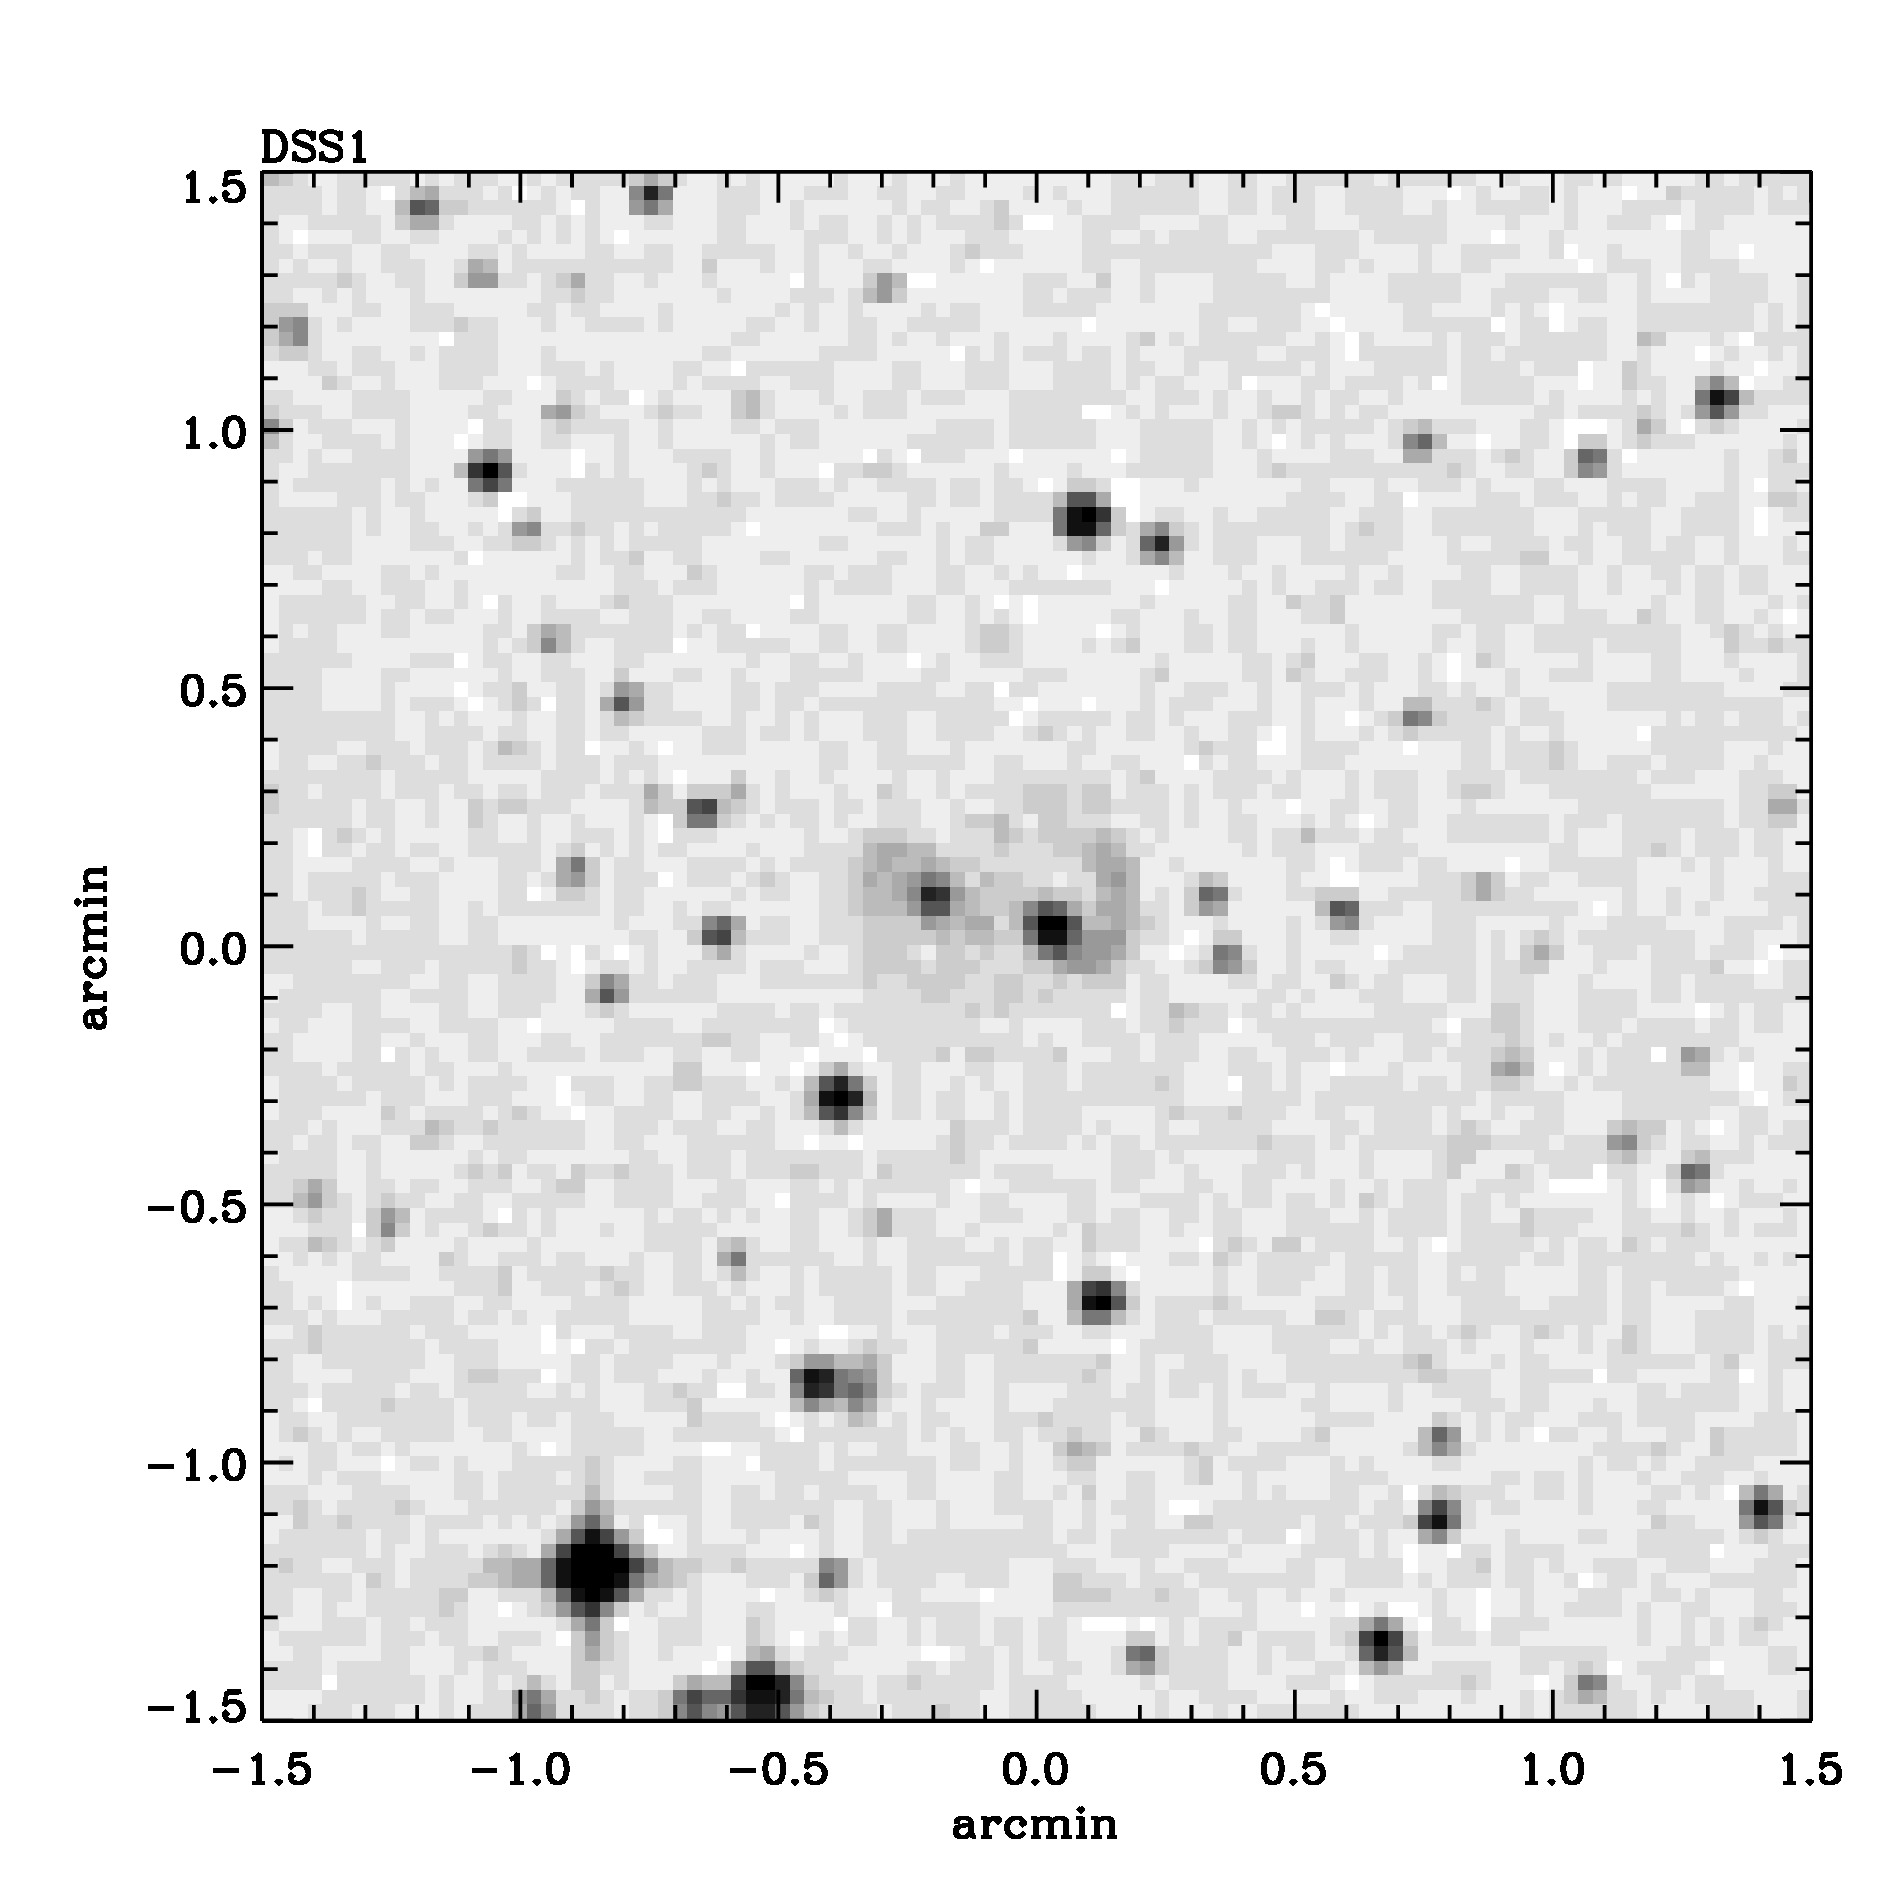 Optical image for SWIFT J1513.8-8125